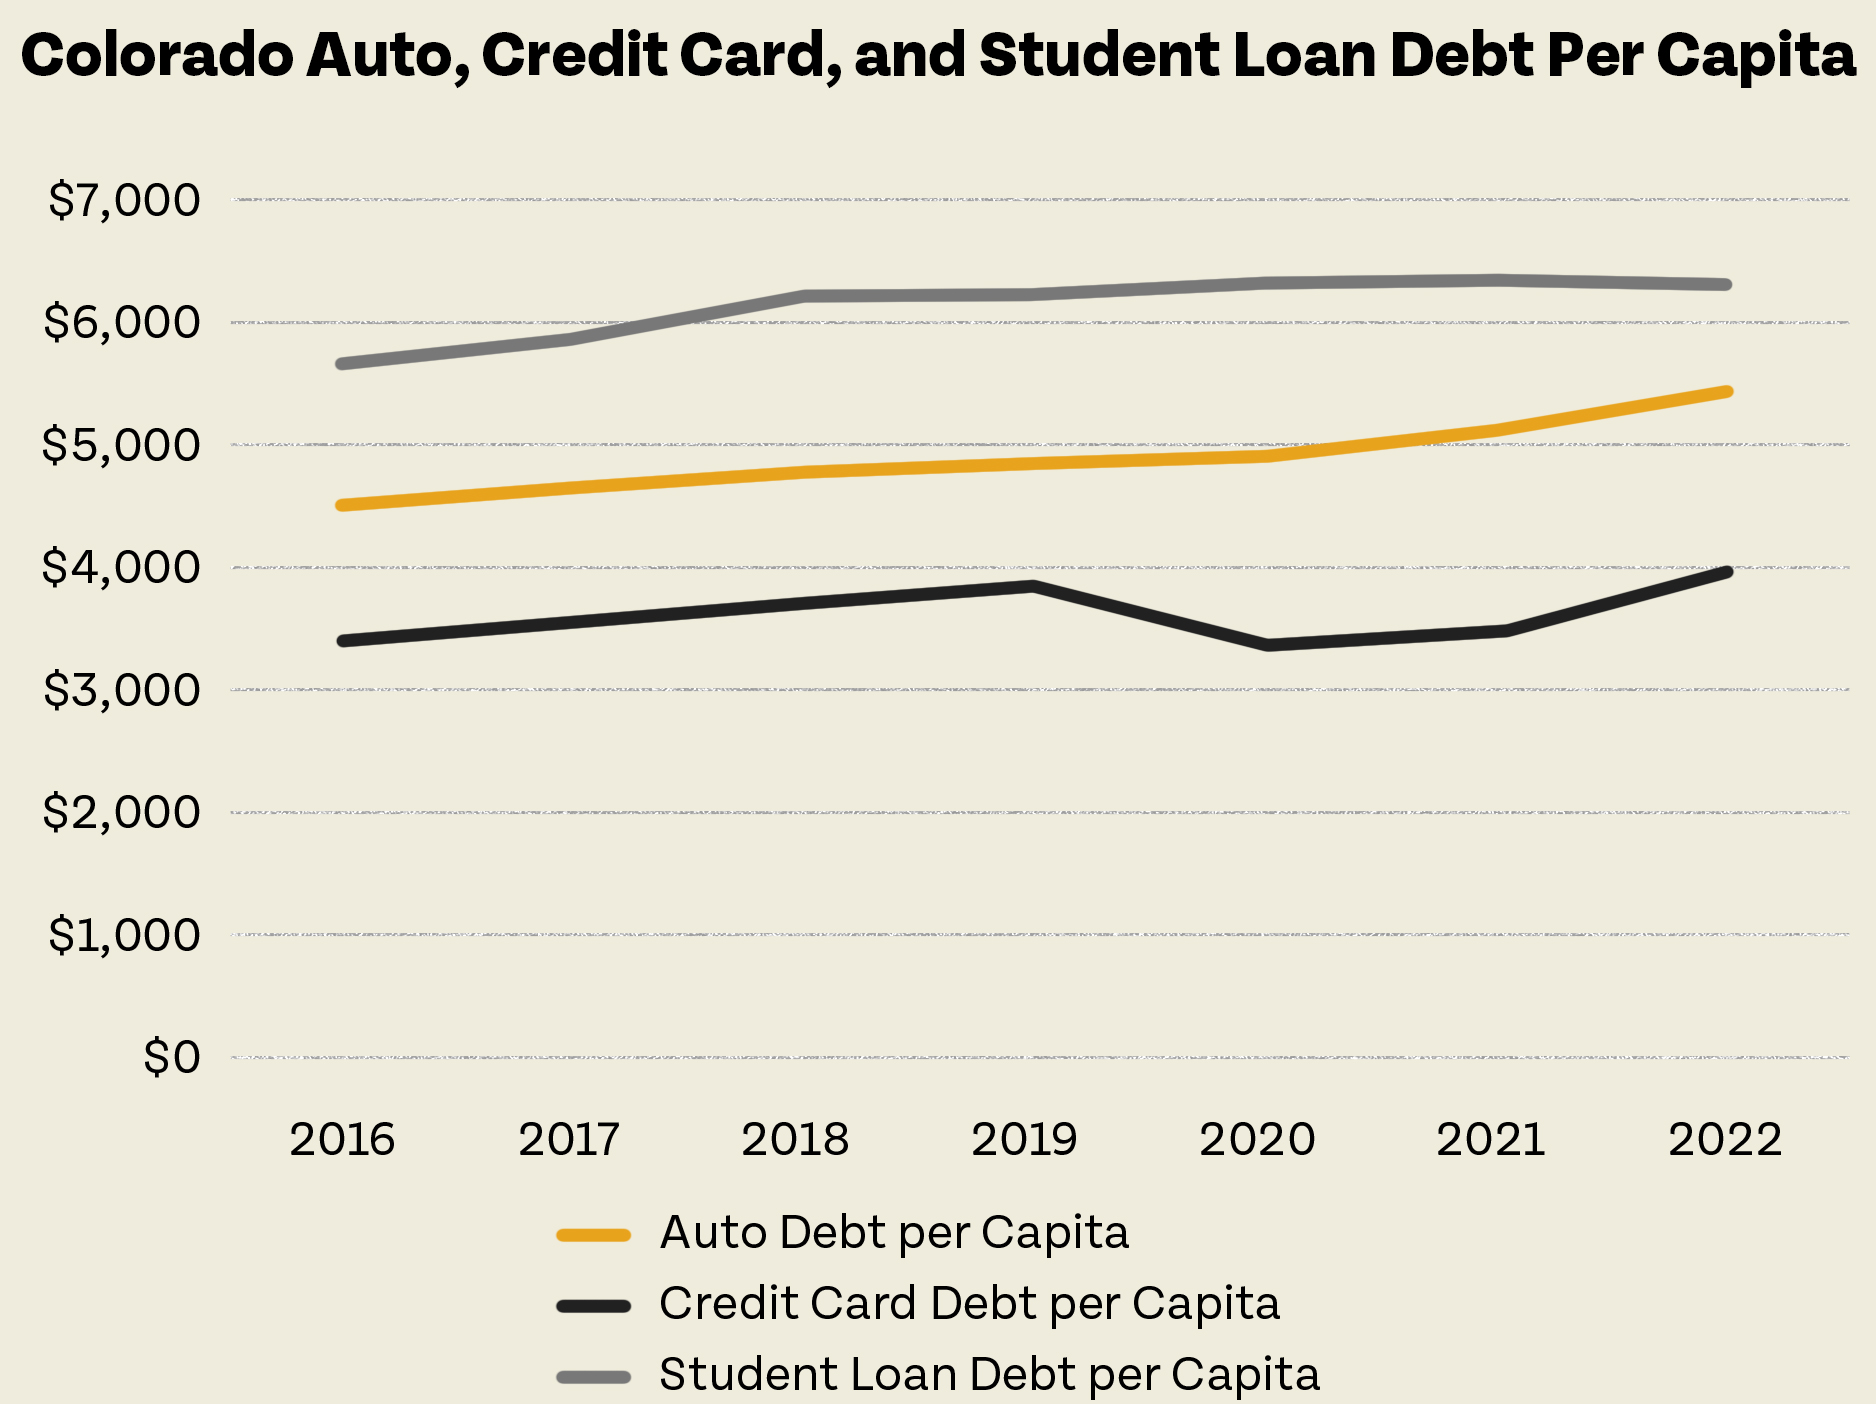 Colorado Auto, Credit Card, and Student Loan Debt per Capita